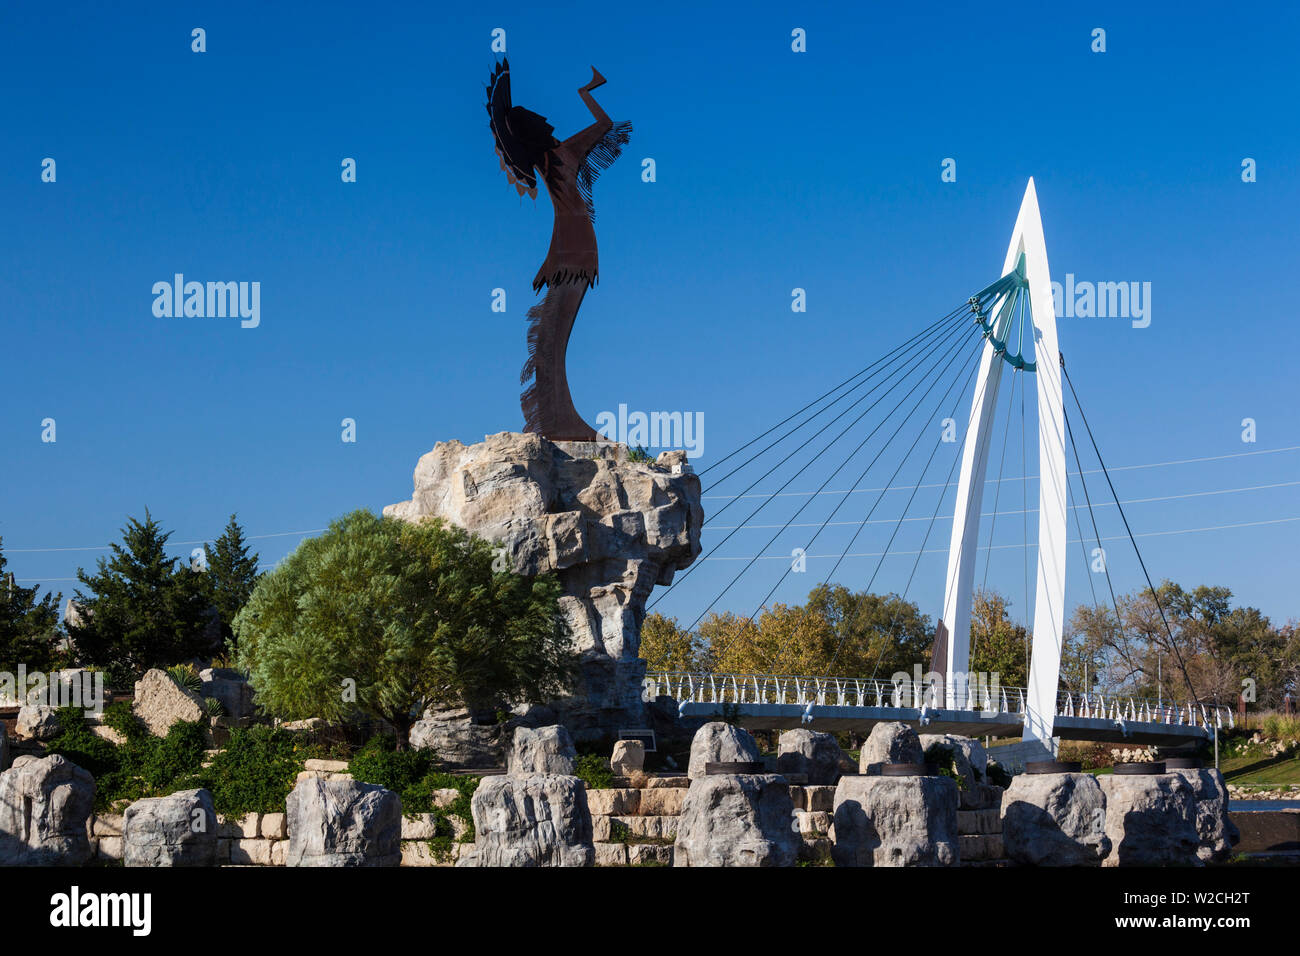 USA, Kansas, Wichita, Keeper of the Plains statue and footbridge on the Arkansas River Stock Photo